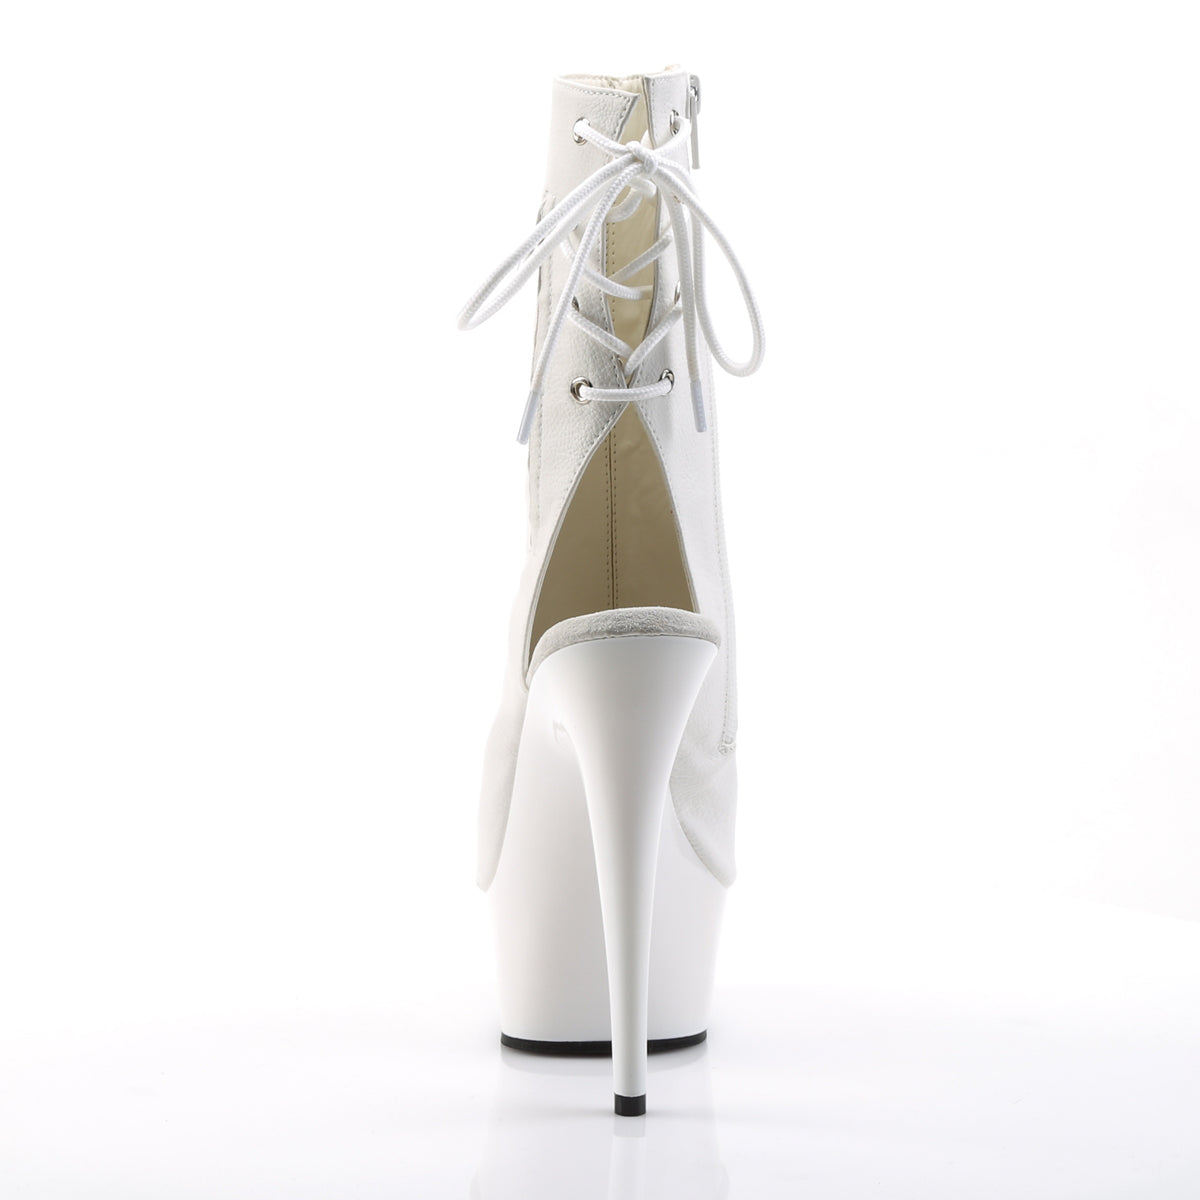 DELIGHT-1018 Pleaser 6 Inch Heel White Pole Dancer Platforms-Pleaser- Sexy Shoes Fetish Footwear